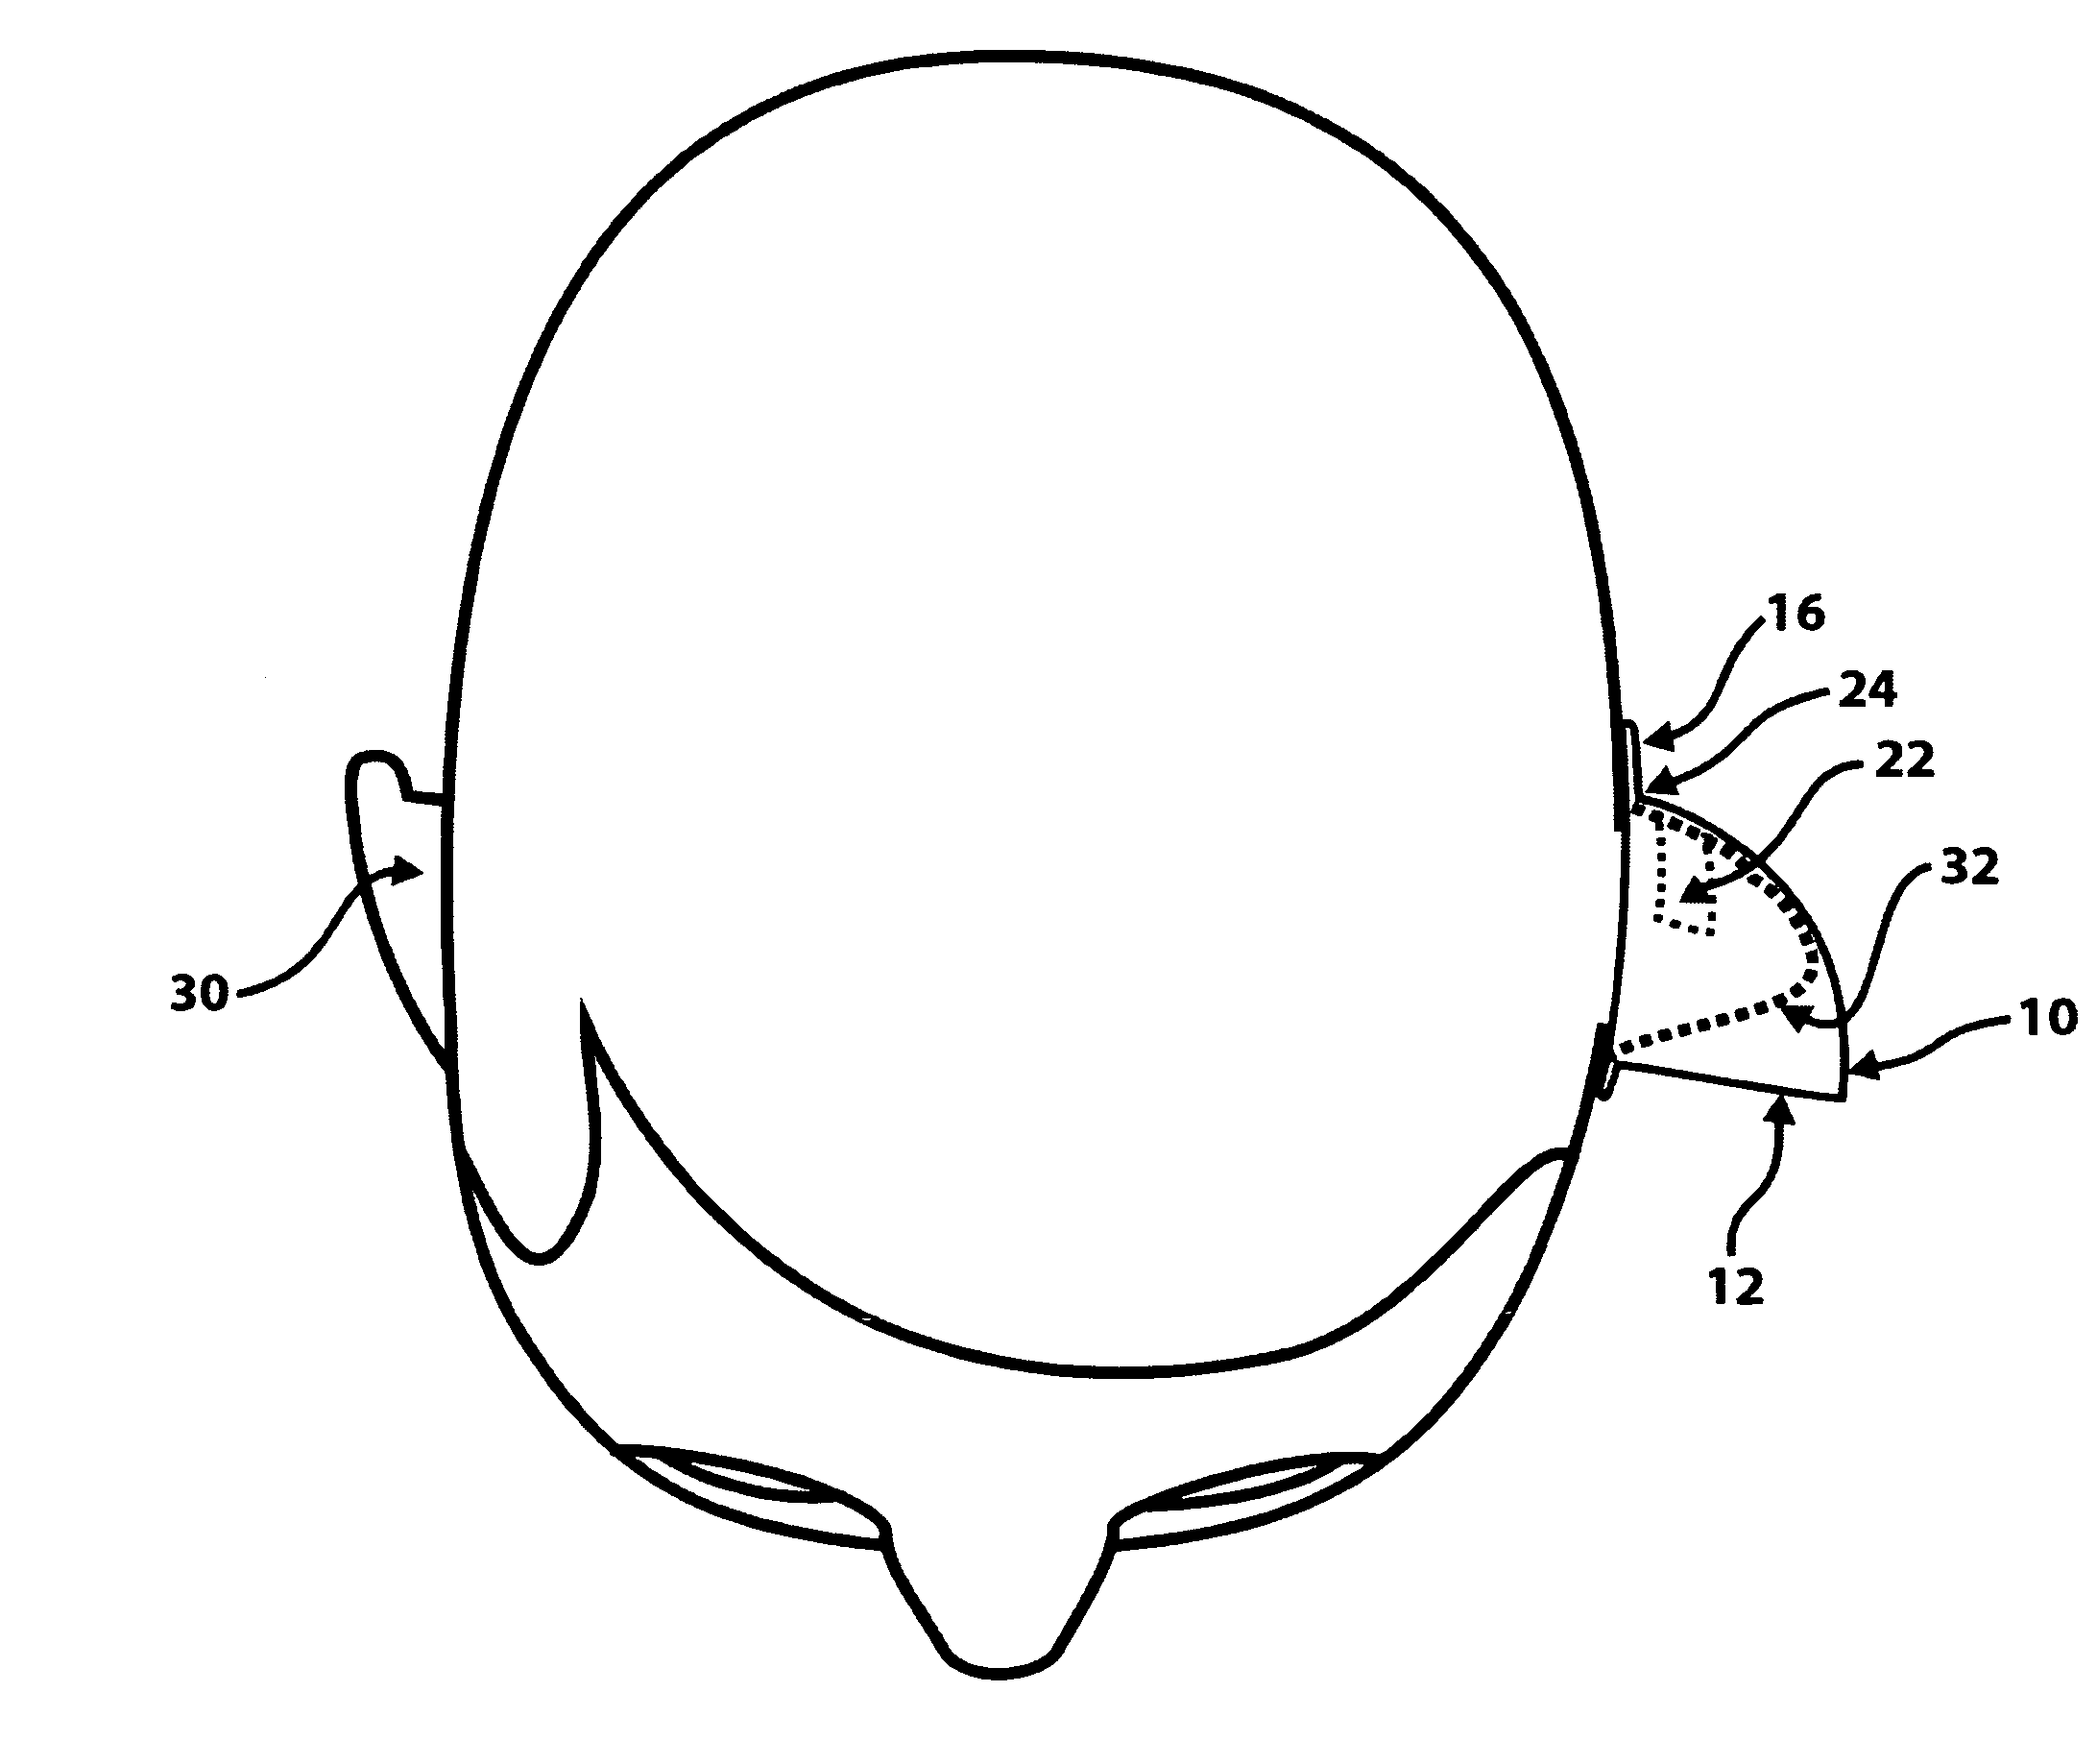 Ear-mounted lenticular acoustic reflector